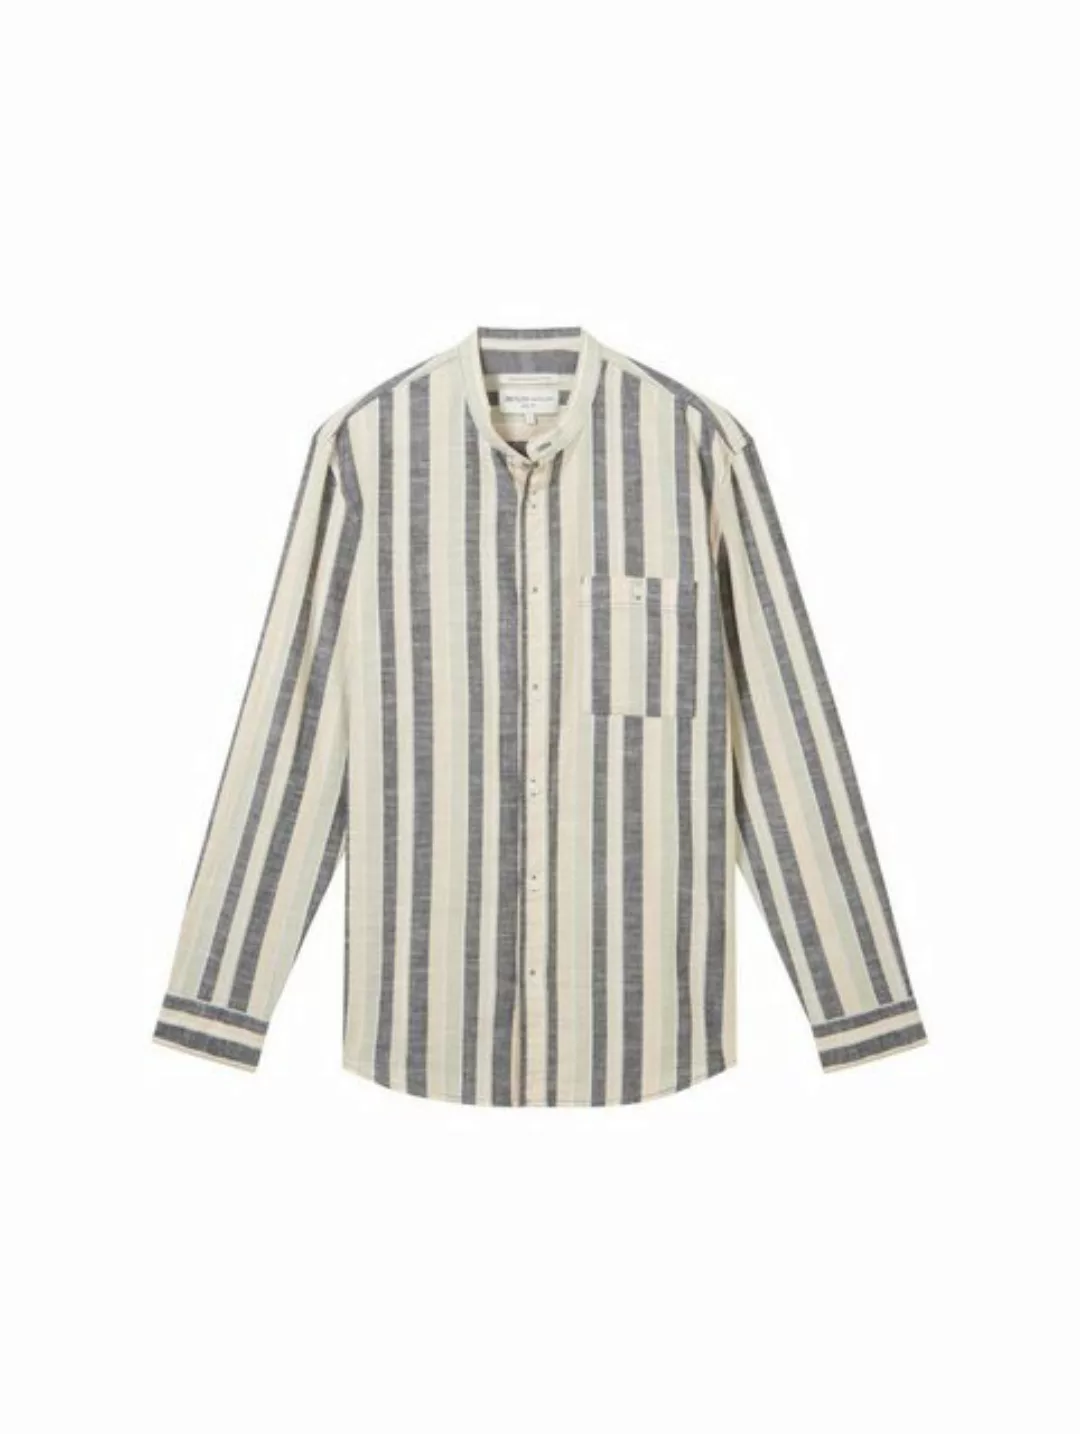 TOM TAILOR Denim T-Shirt striped slubyarn shirt günstig online kaufen